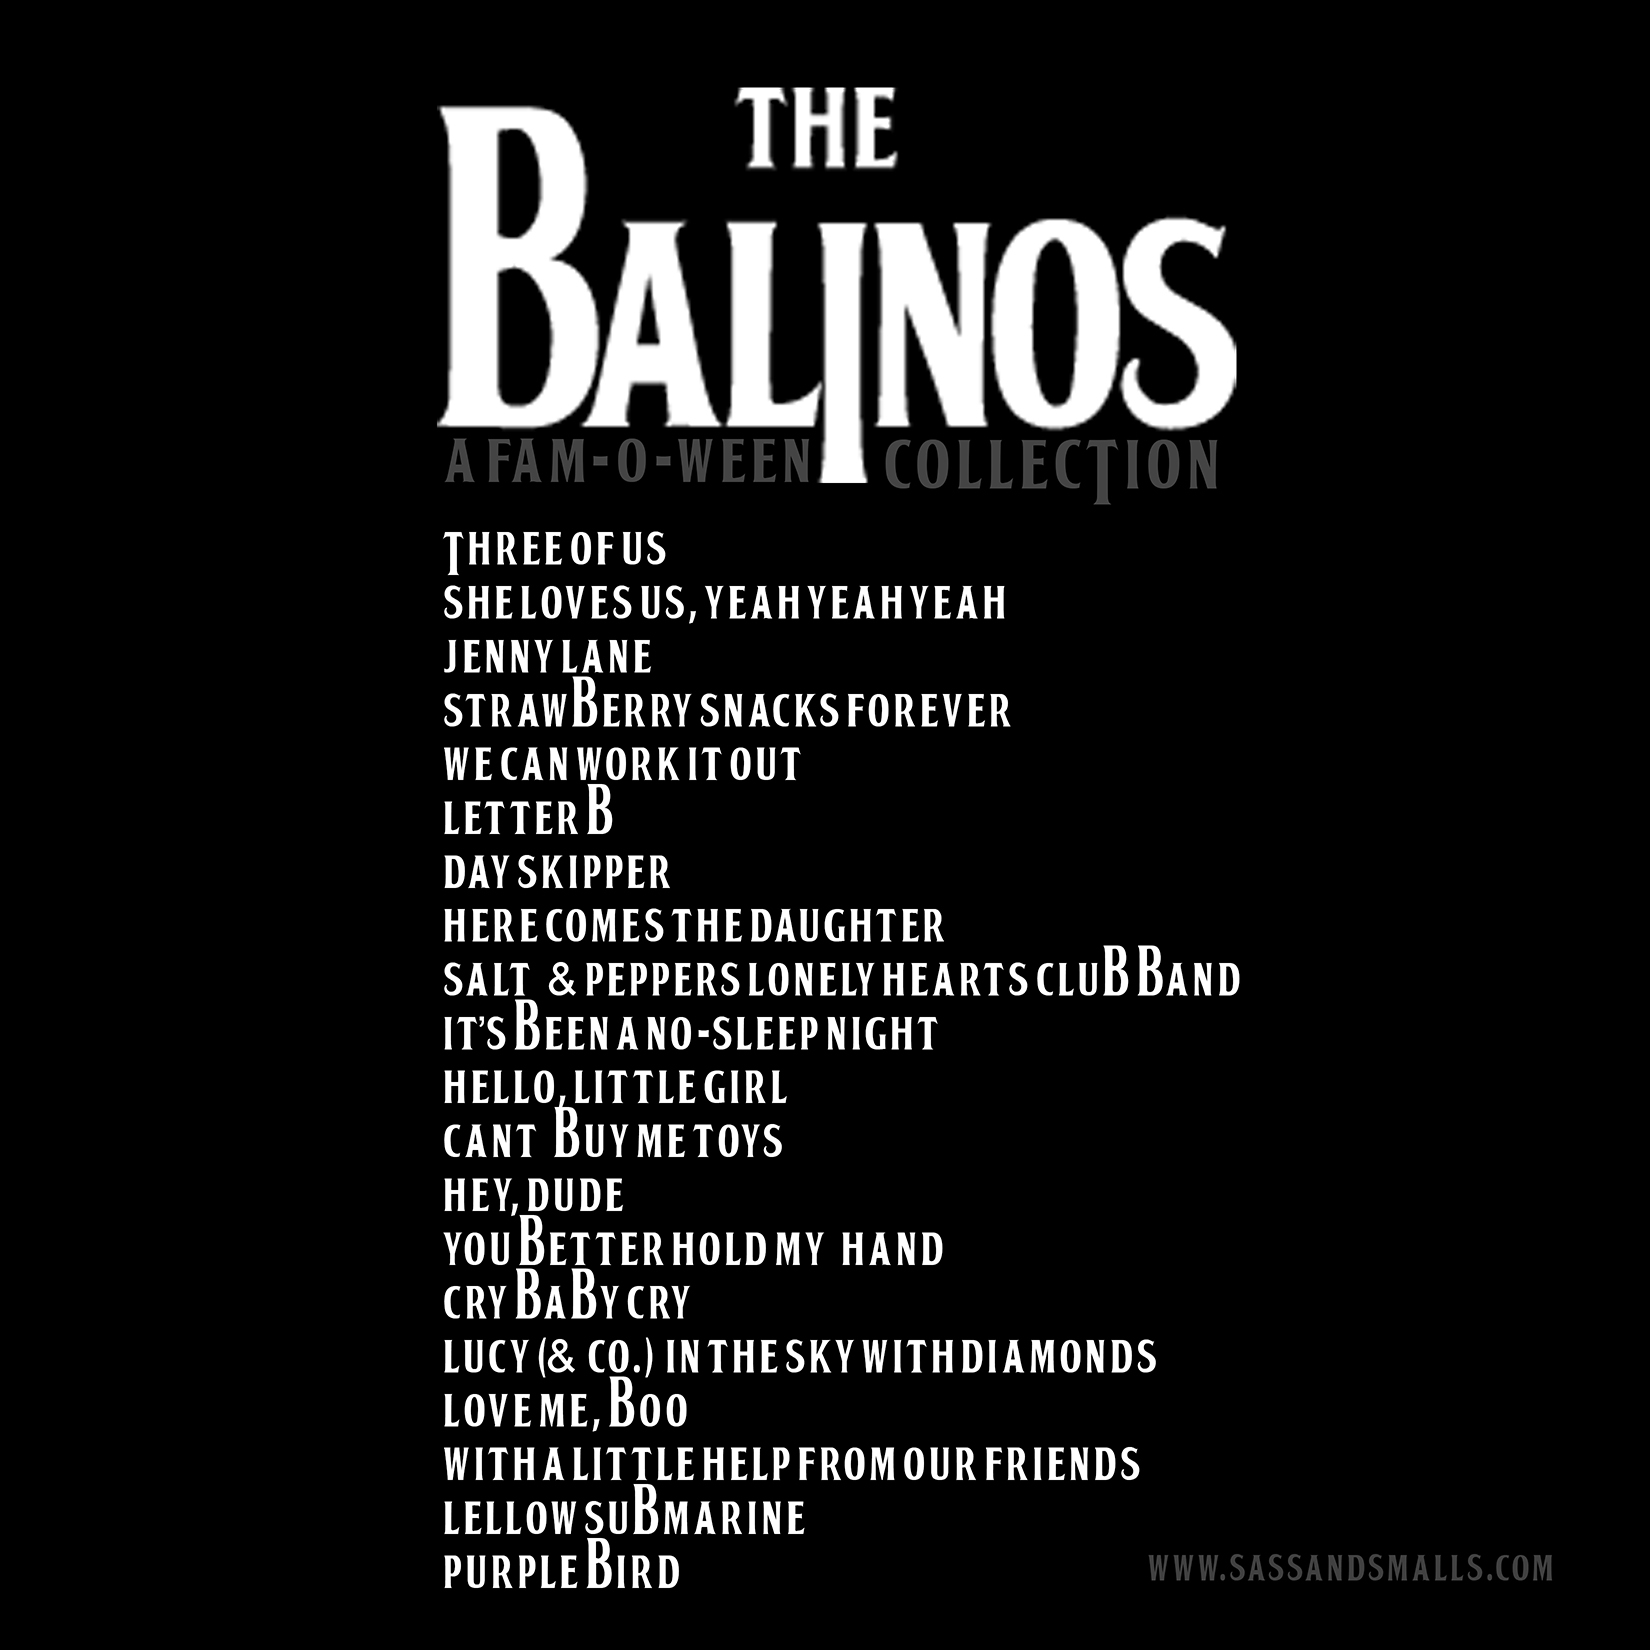 The Balinos aka The Beatles Fam-o-ween Album Collection www.sassandsmalls.com